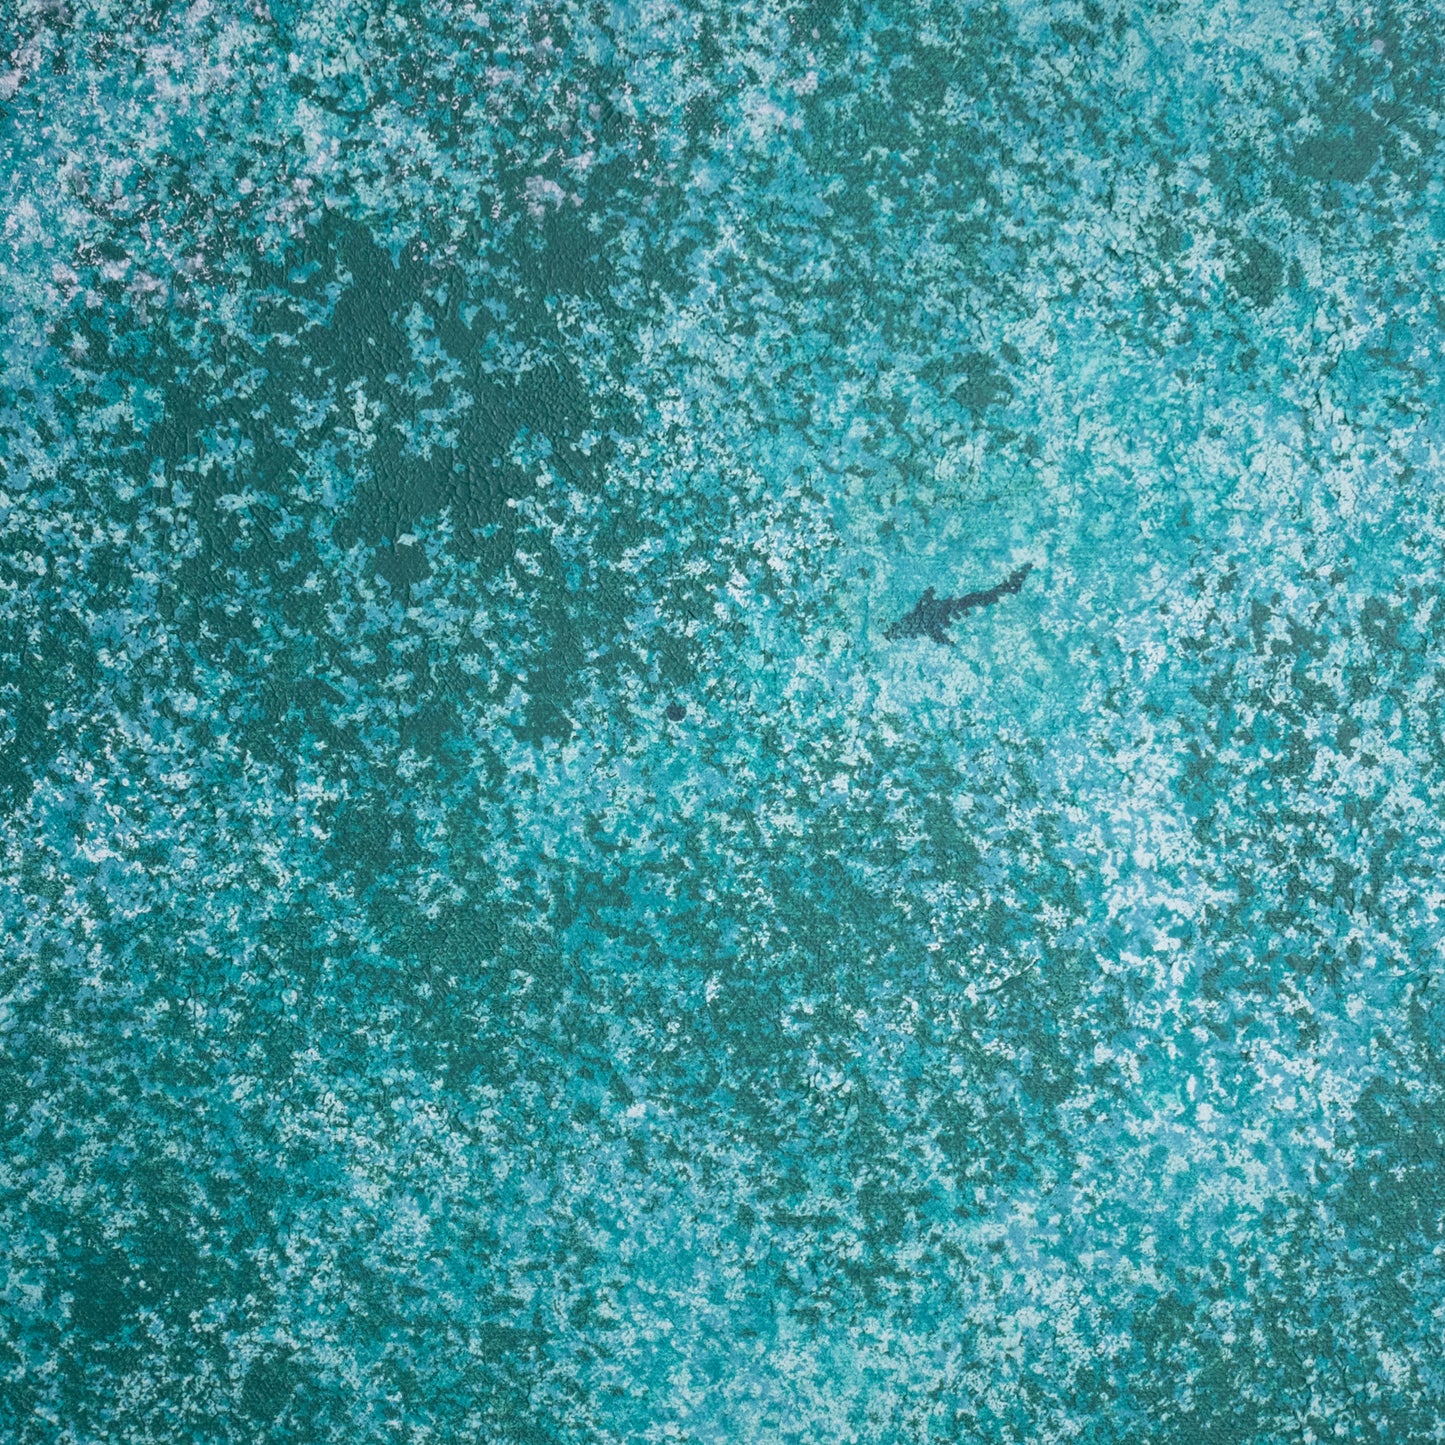 Atlantic Shimmer - Acrylic on Canvas